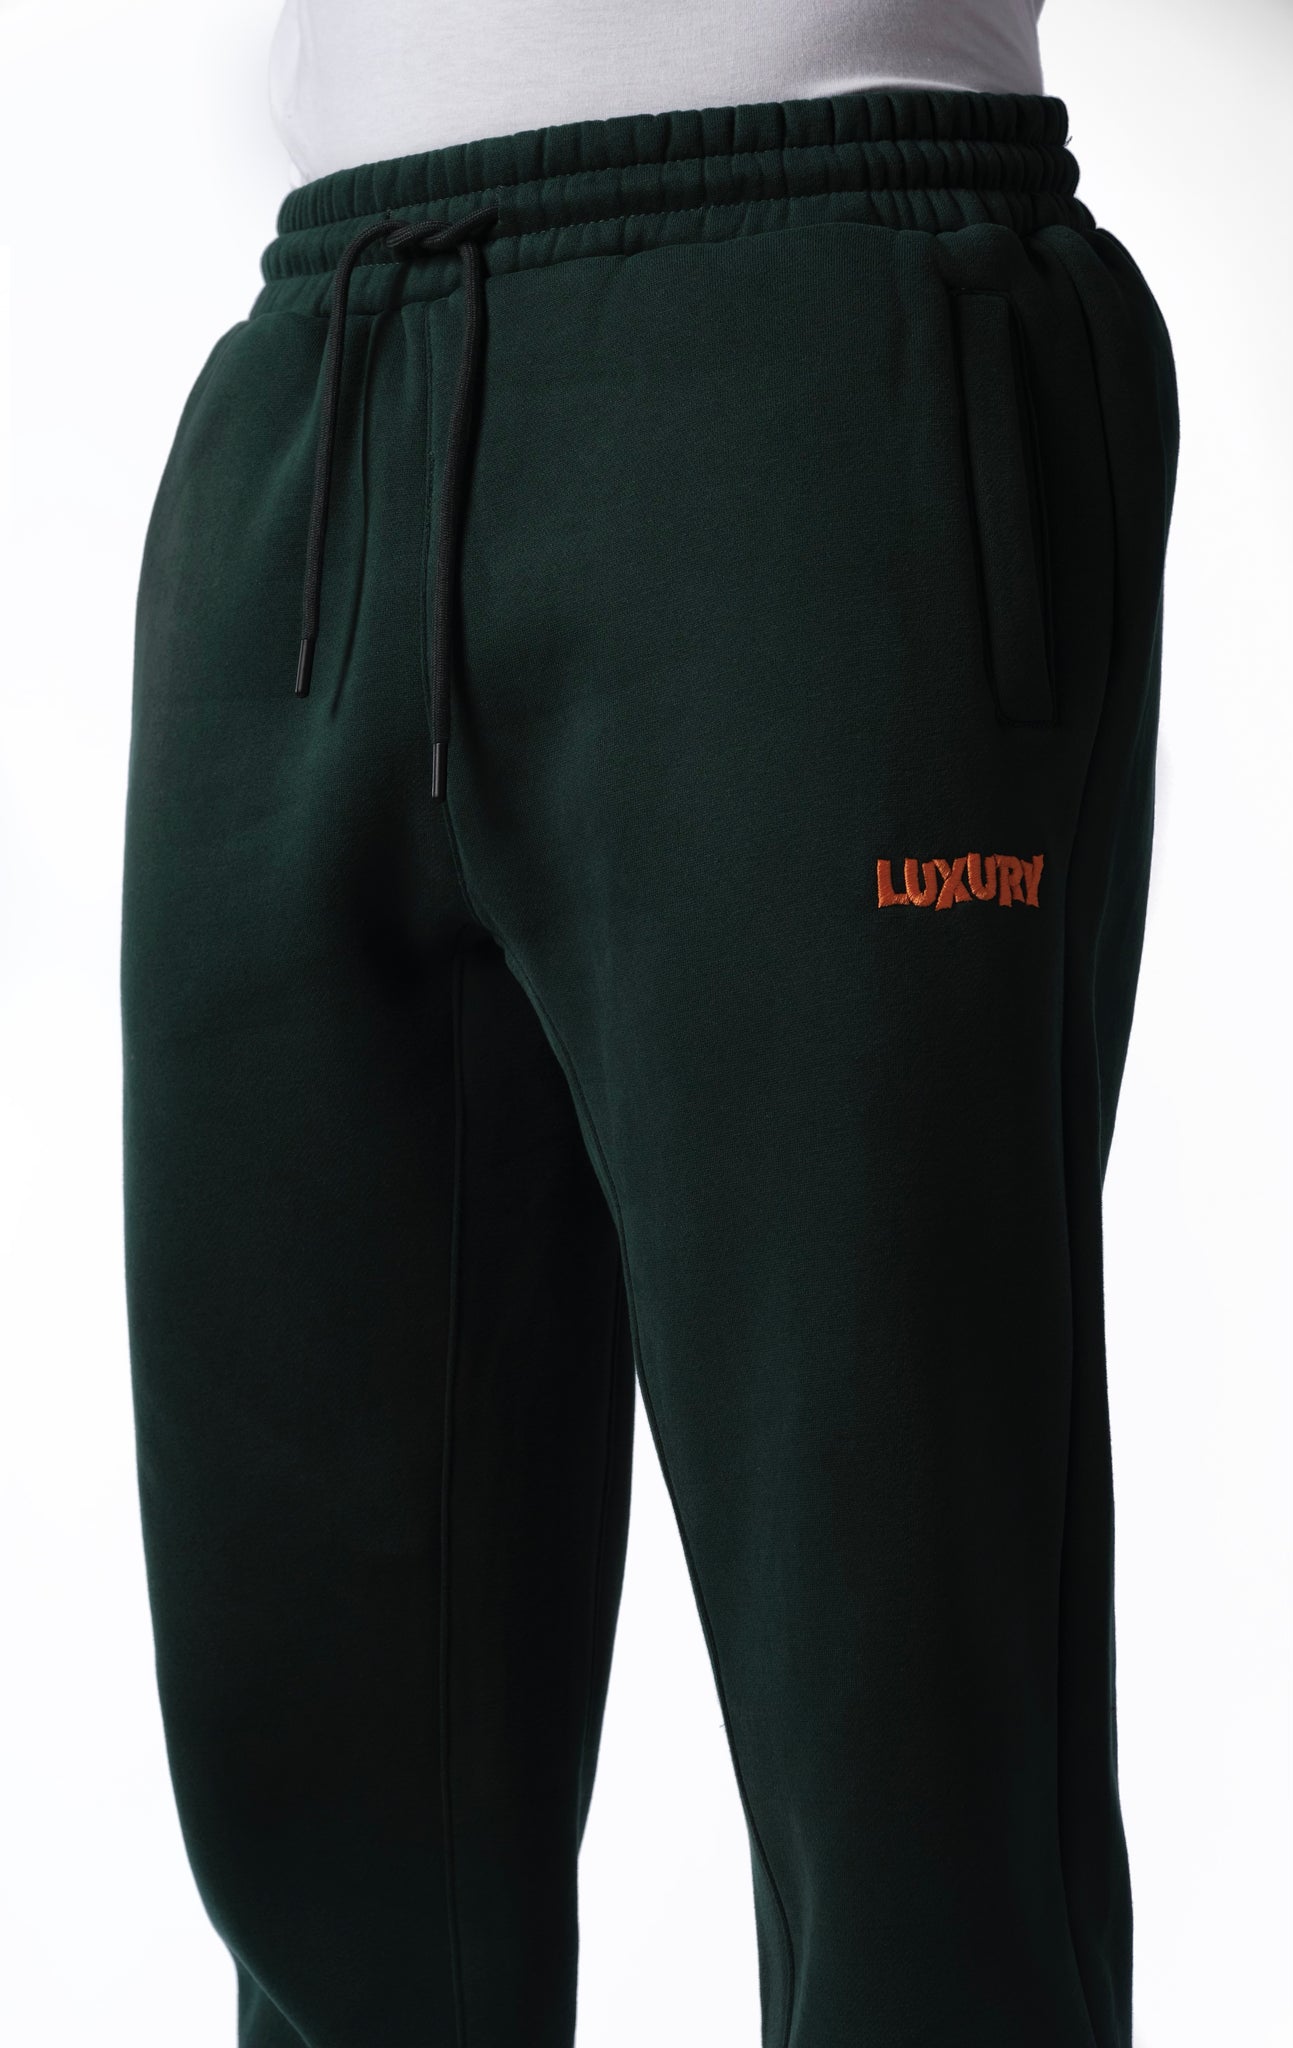 Green Luxury Sweatpants